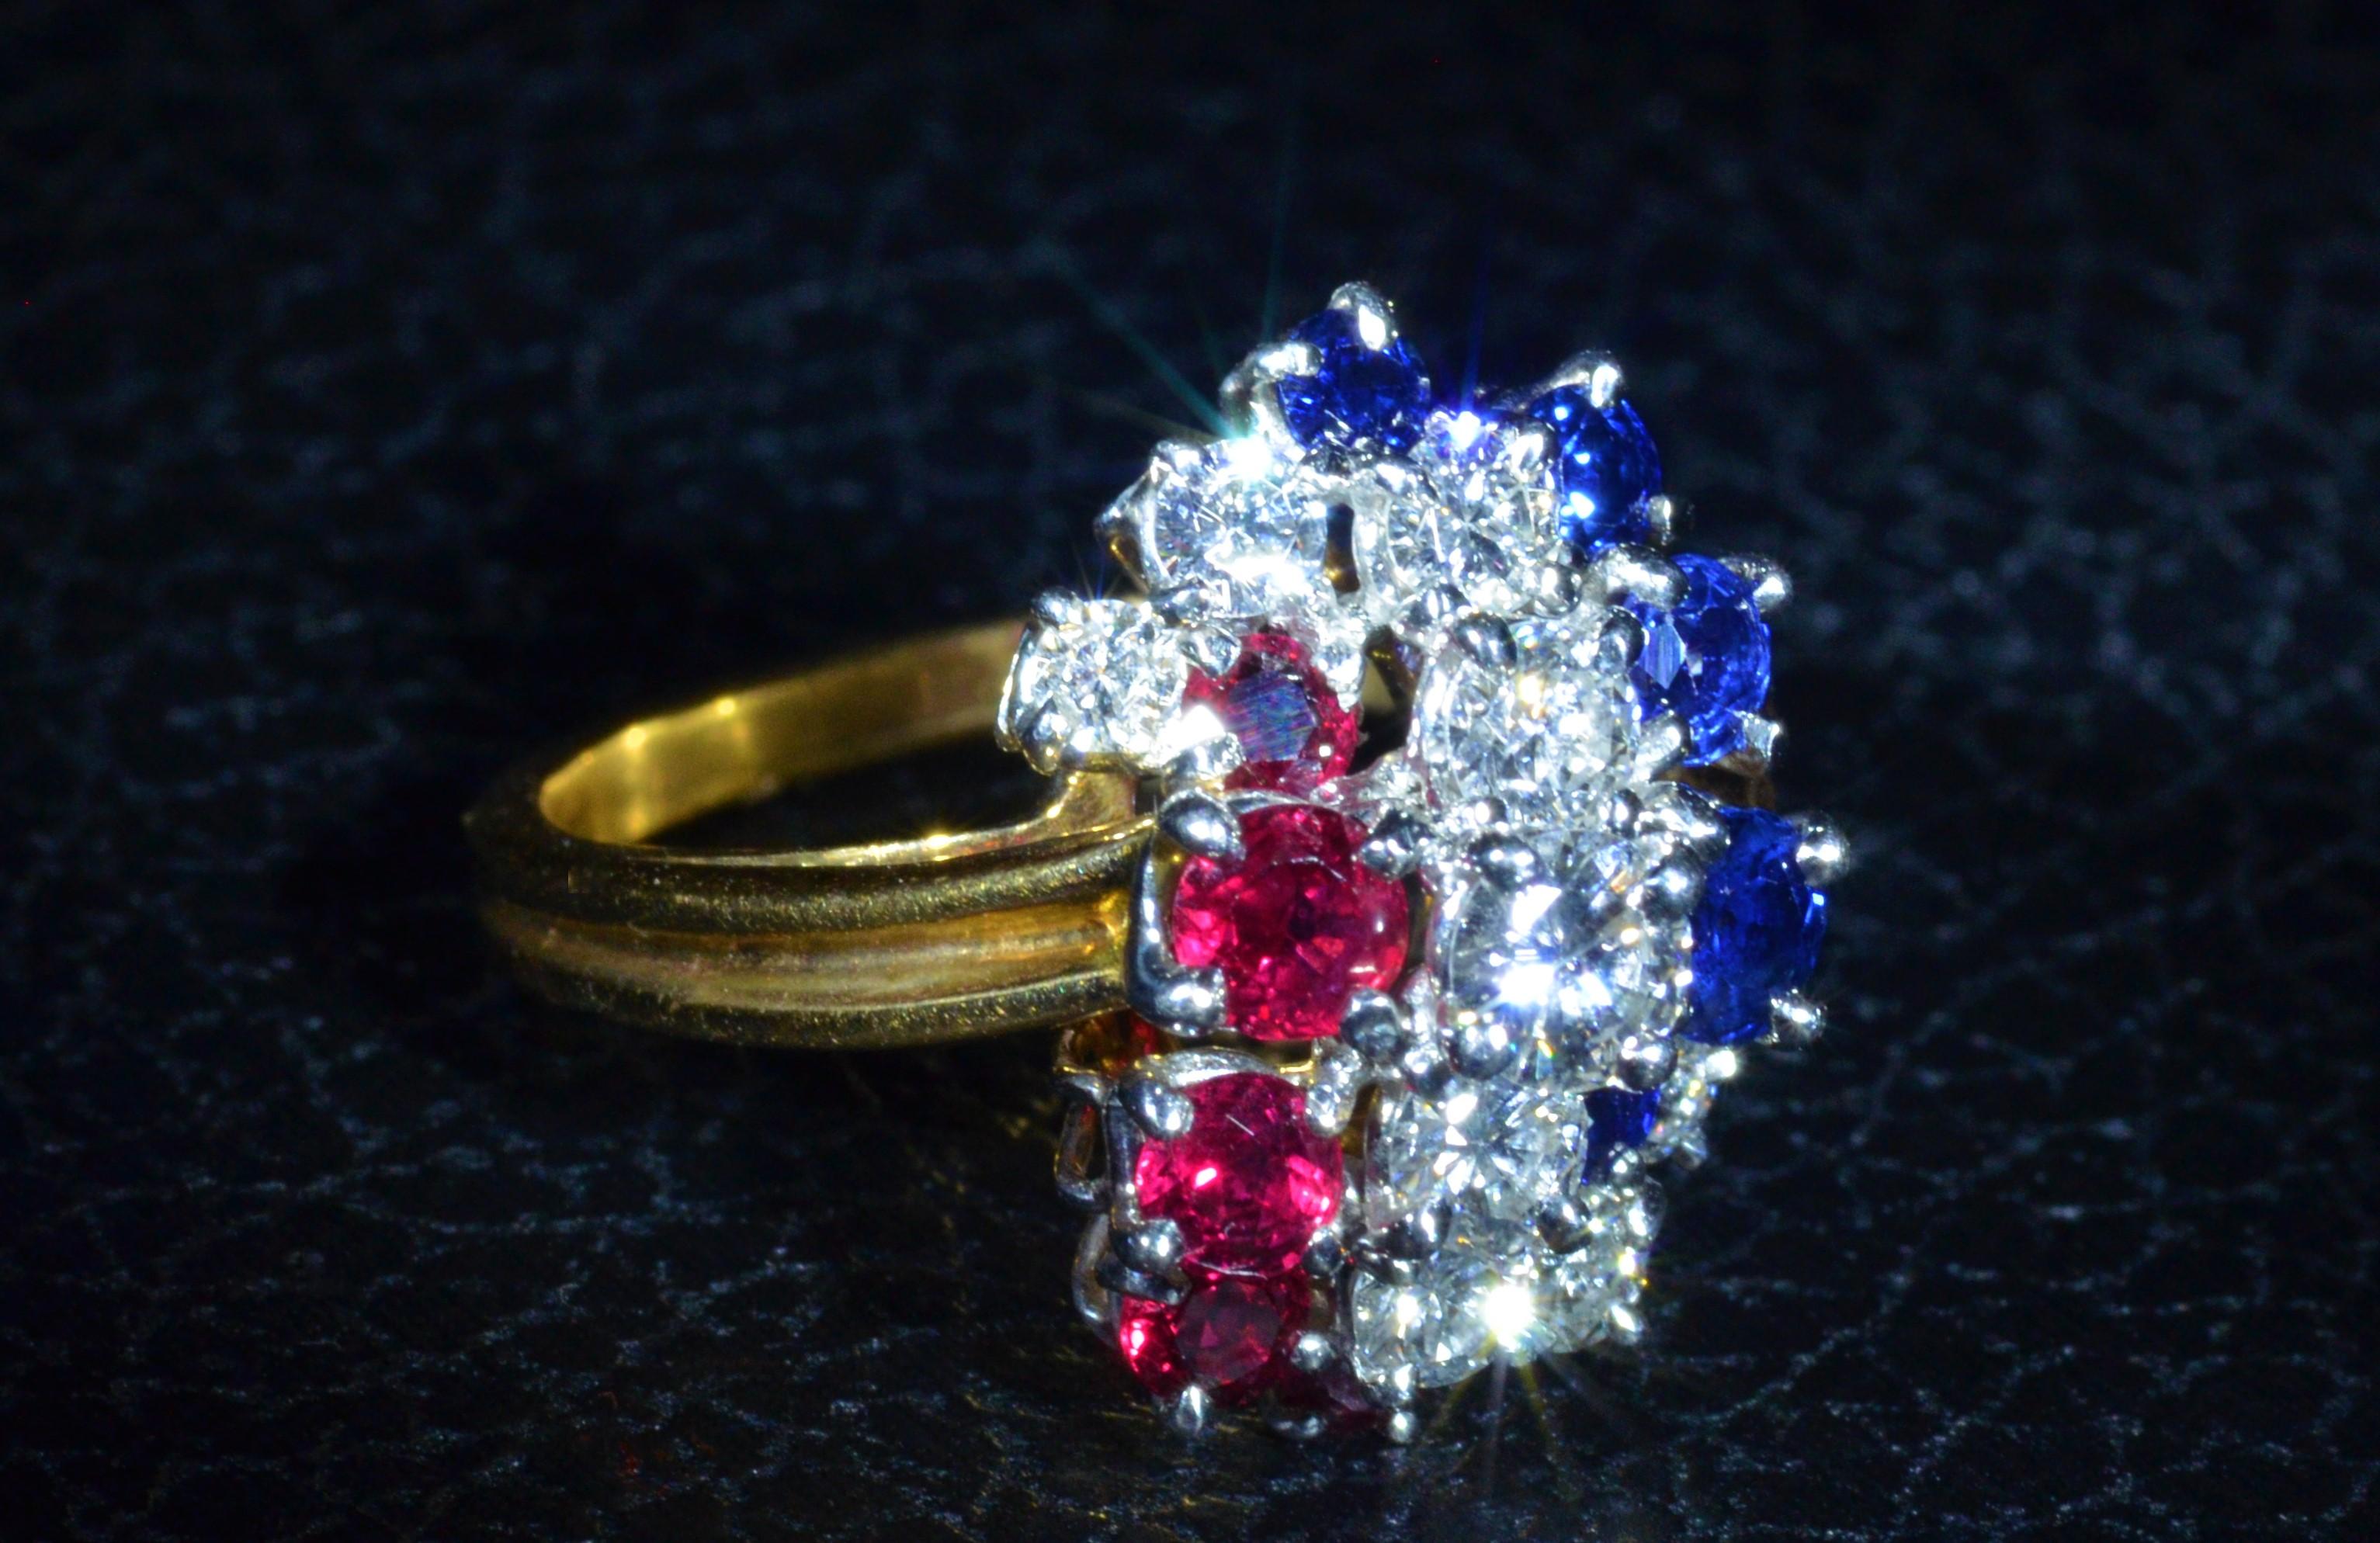 Retro Patriotic Oscar Heyman Signed Ruby, Diamond, Sapphire Ring in 18 Karat and Plat For Sale